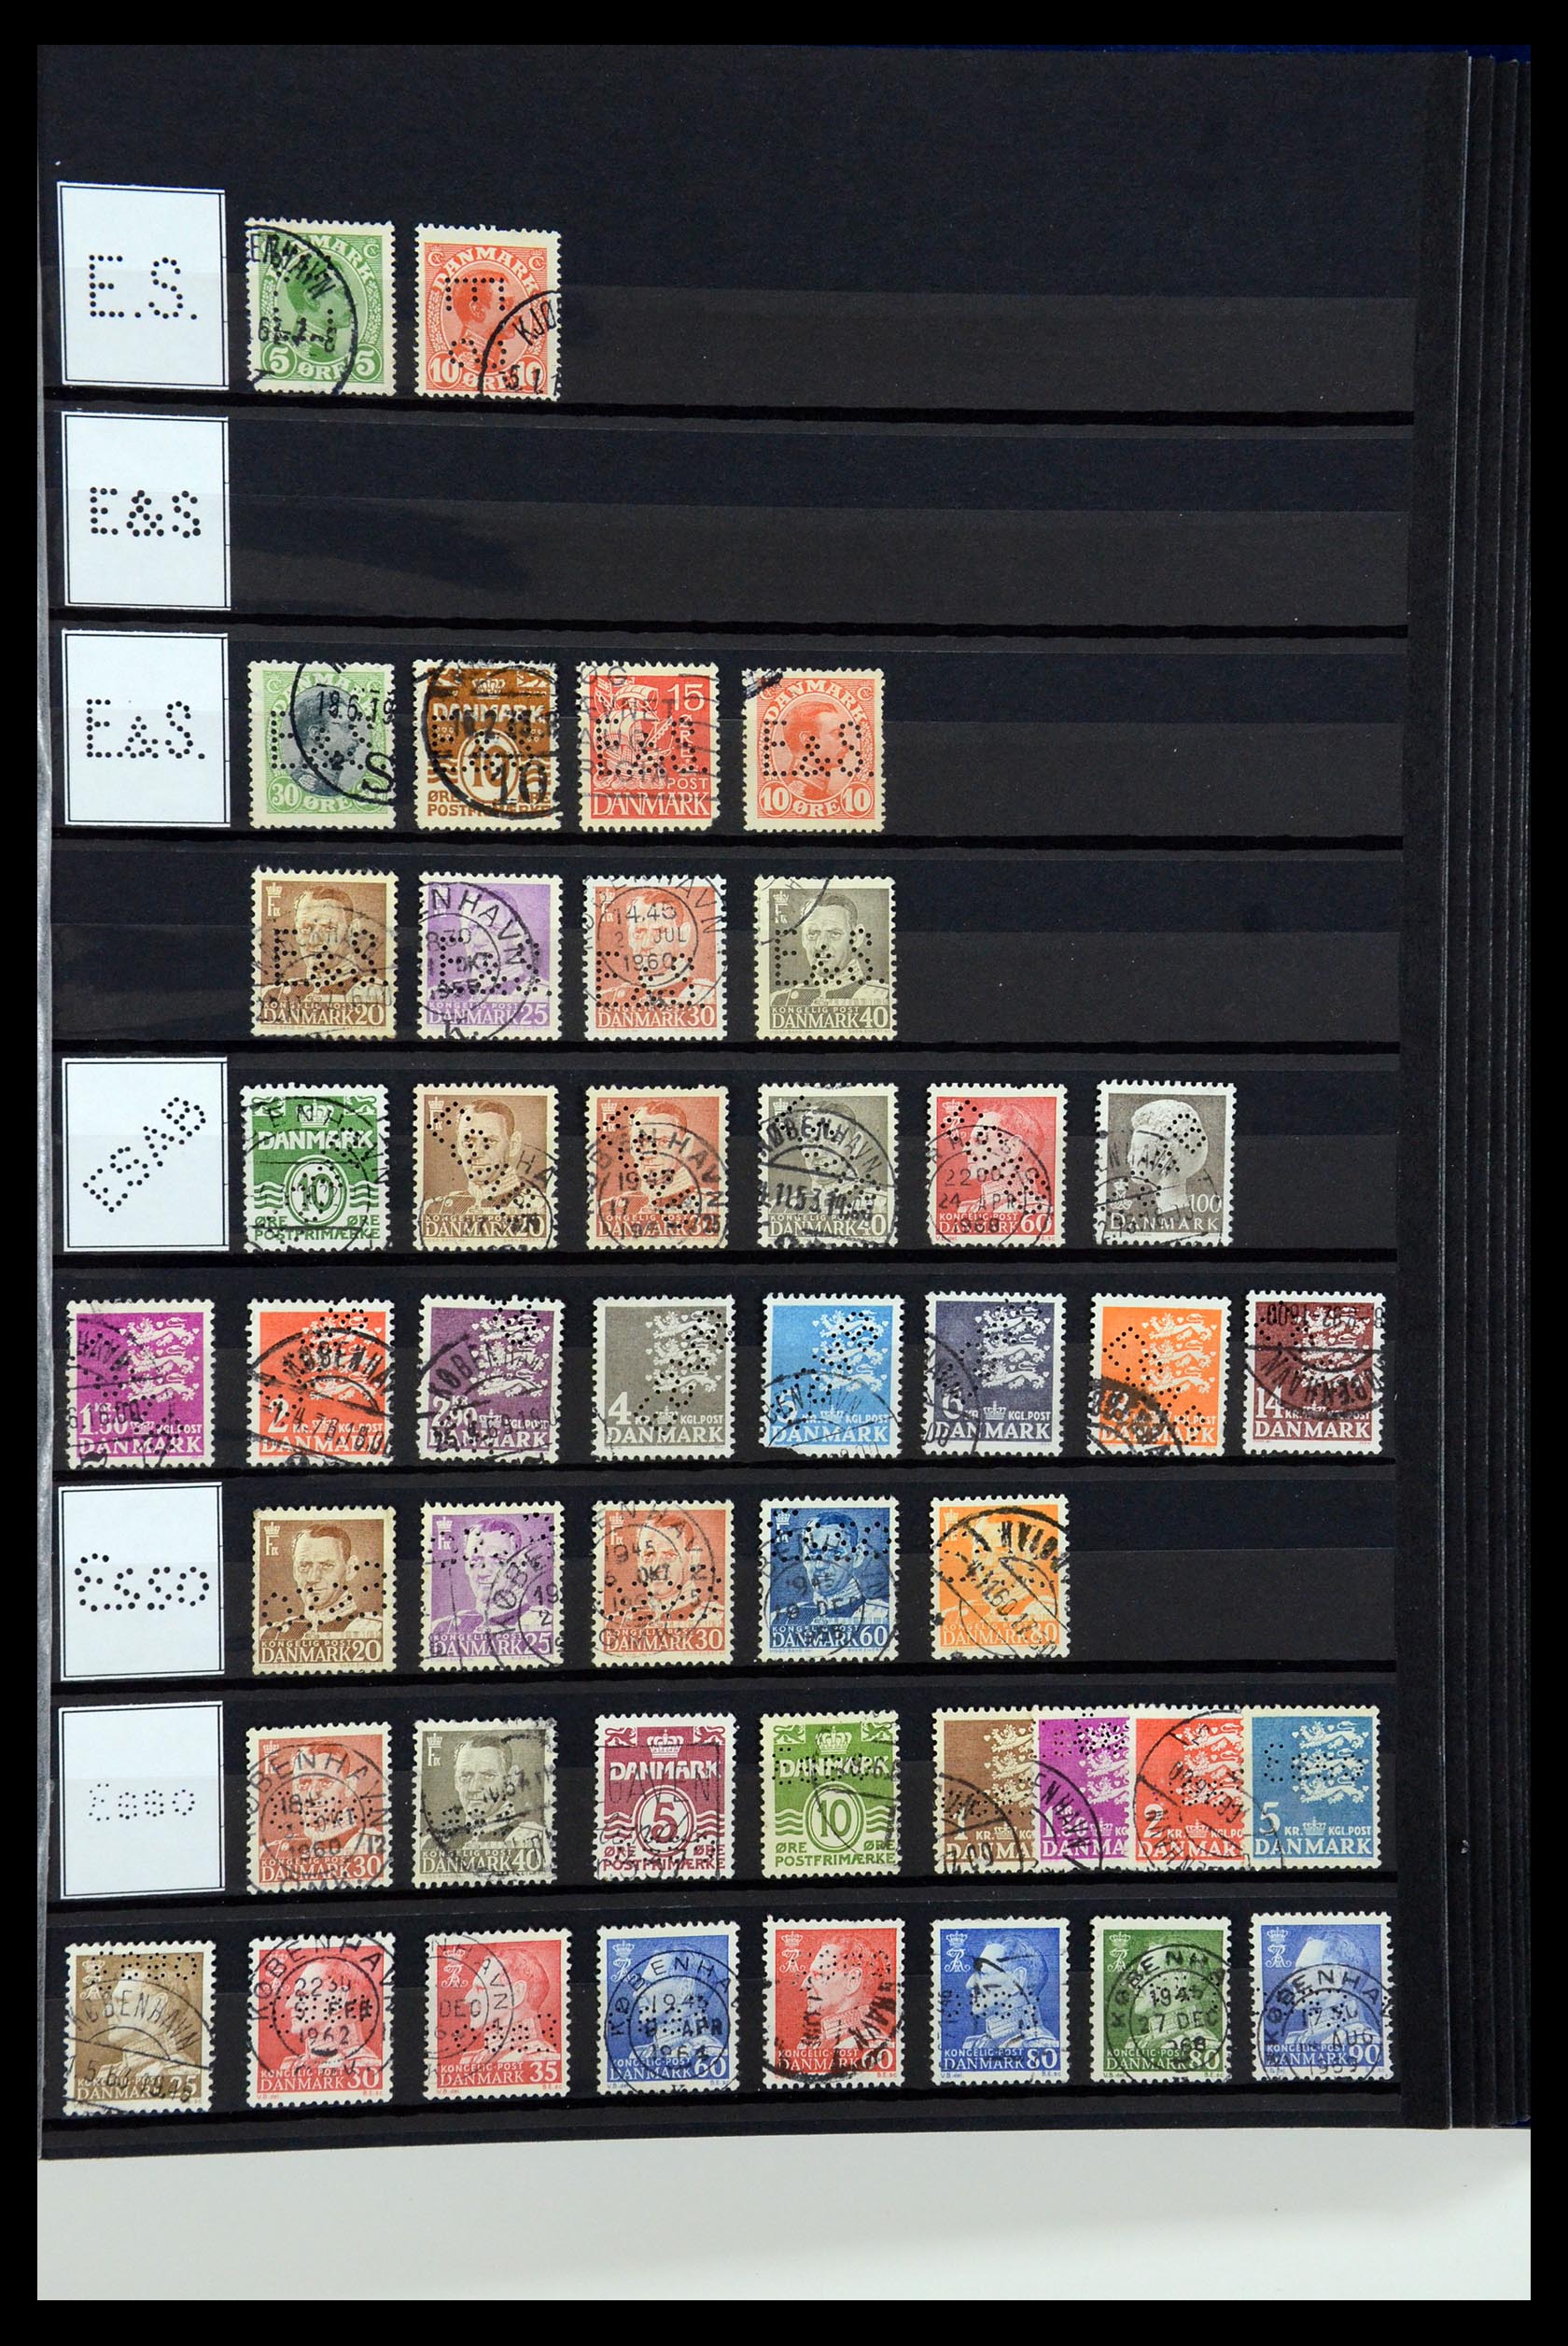 36396 046 - Stamp collection 36396 Denmark perfins.